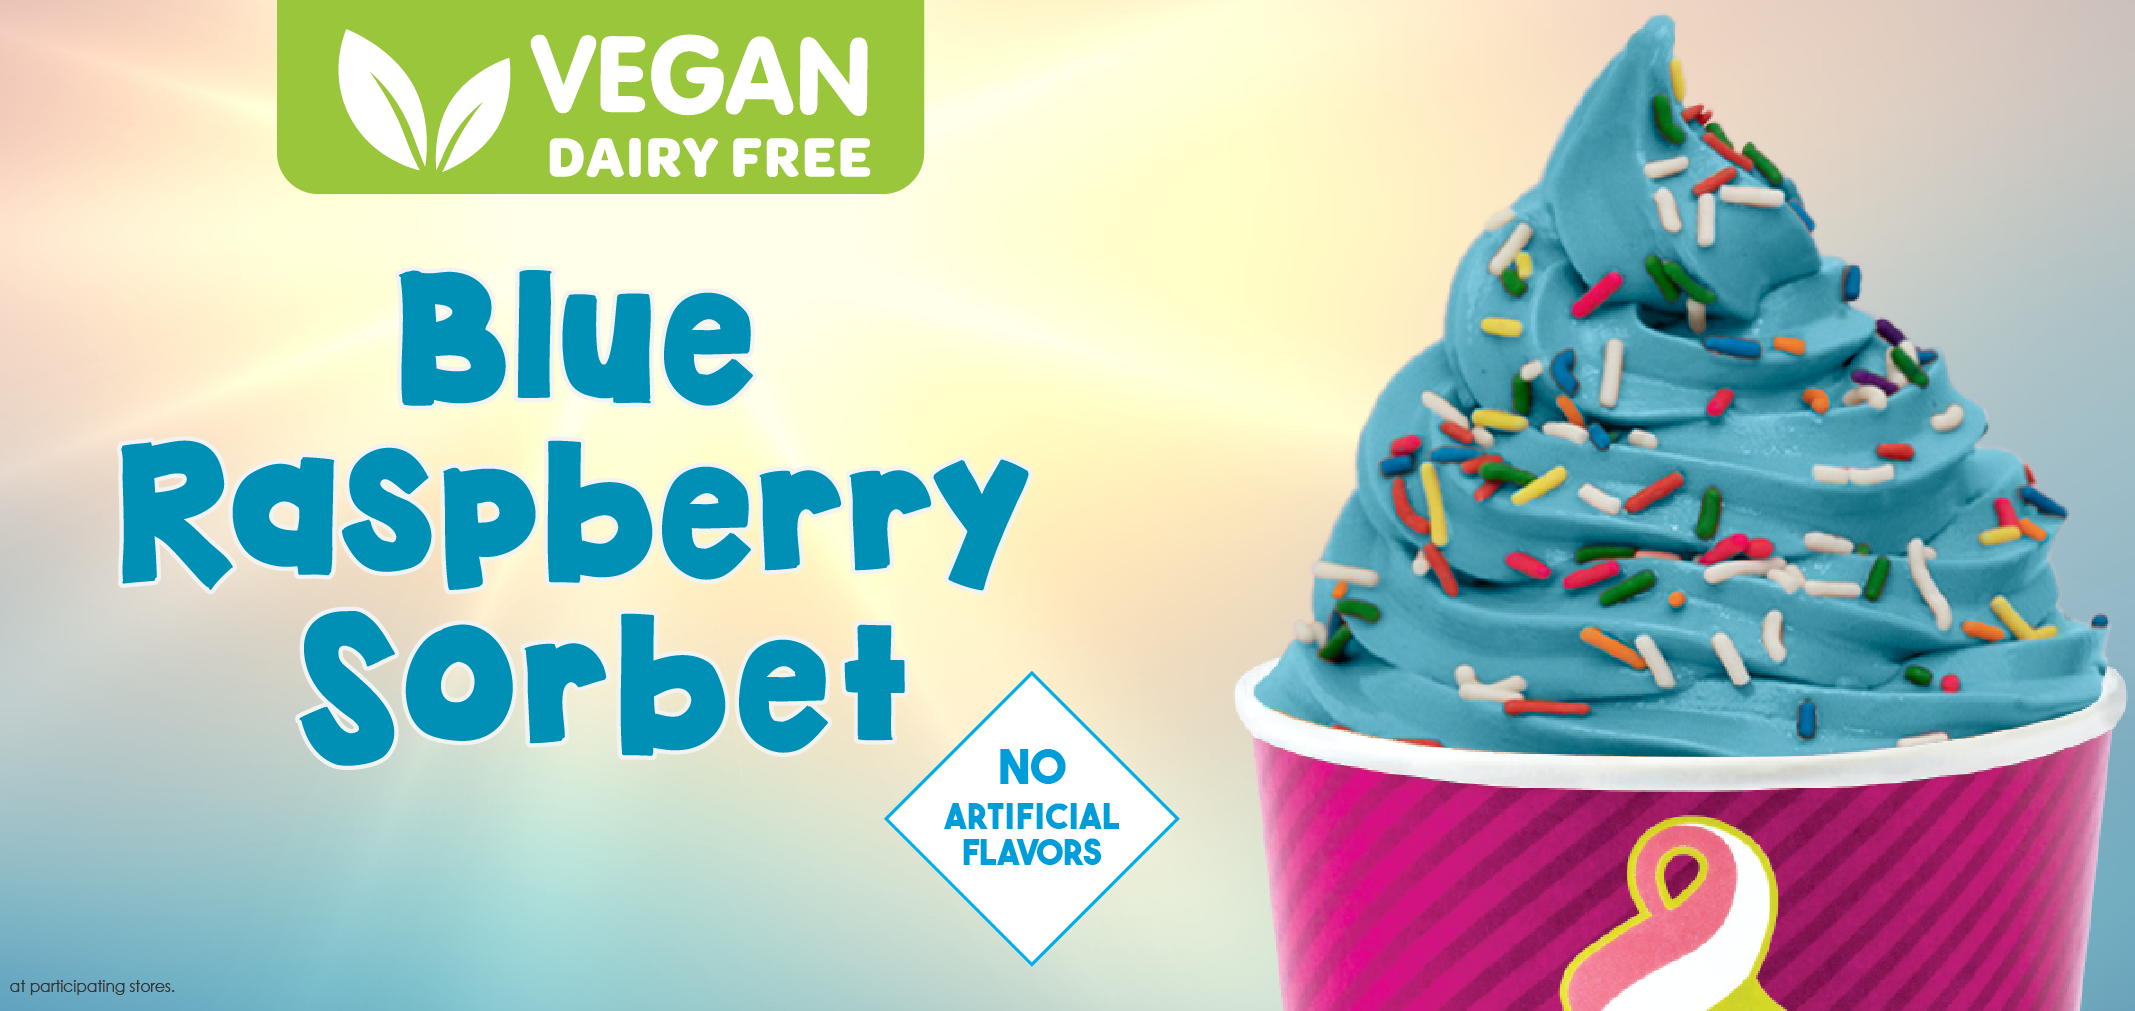 vegan blue raspberry  sorbet label image